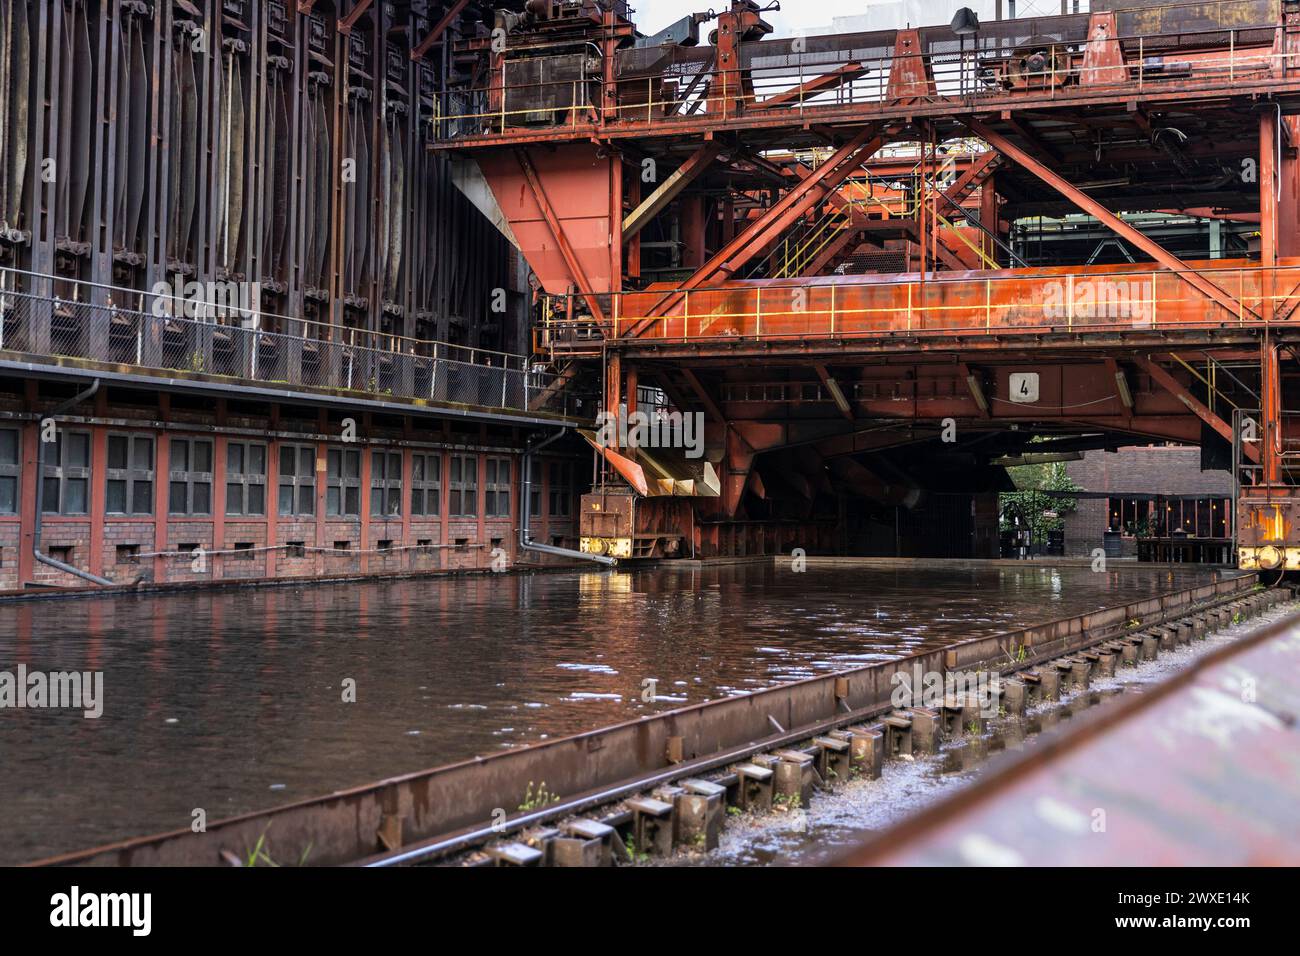 Zeche Zollverein cokery industrial architecture, Unesco World Heritage site, Ruhr Area, Essen, Germany Stock Photo